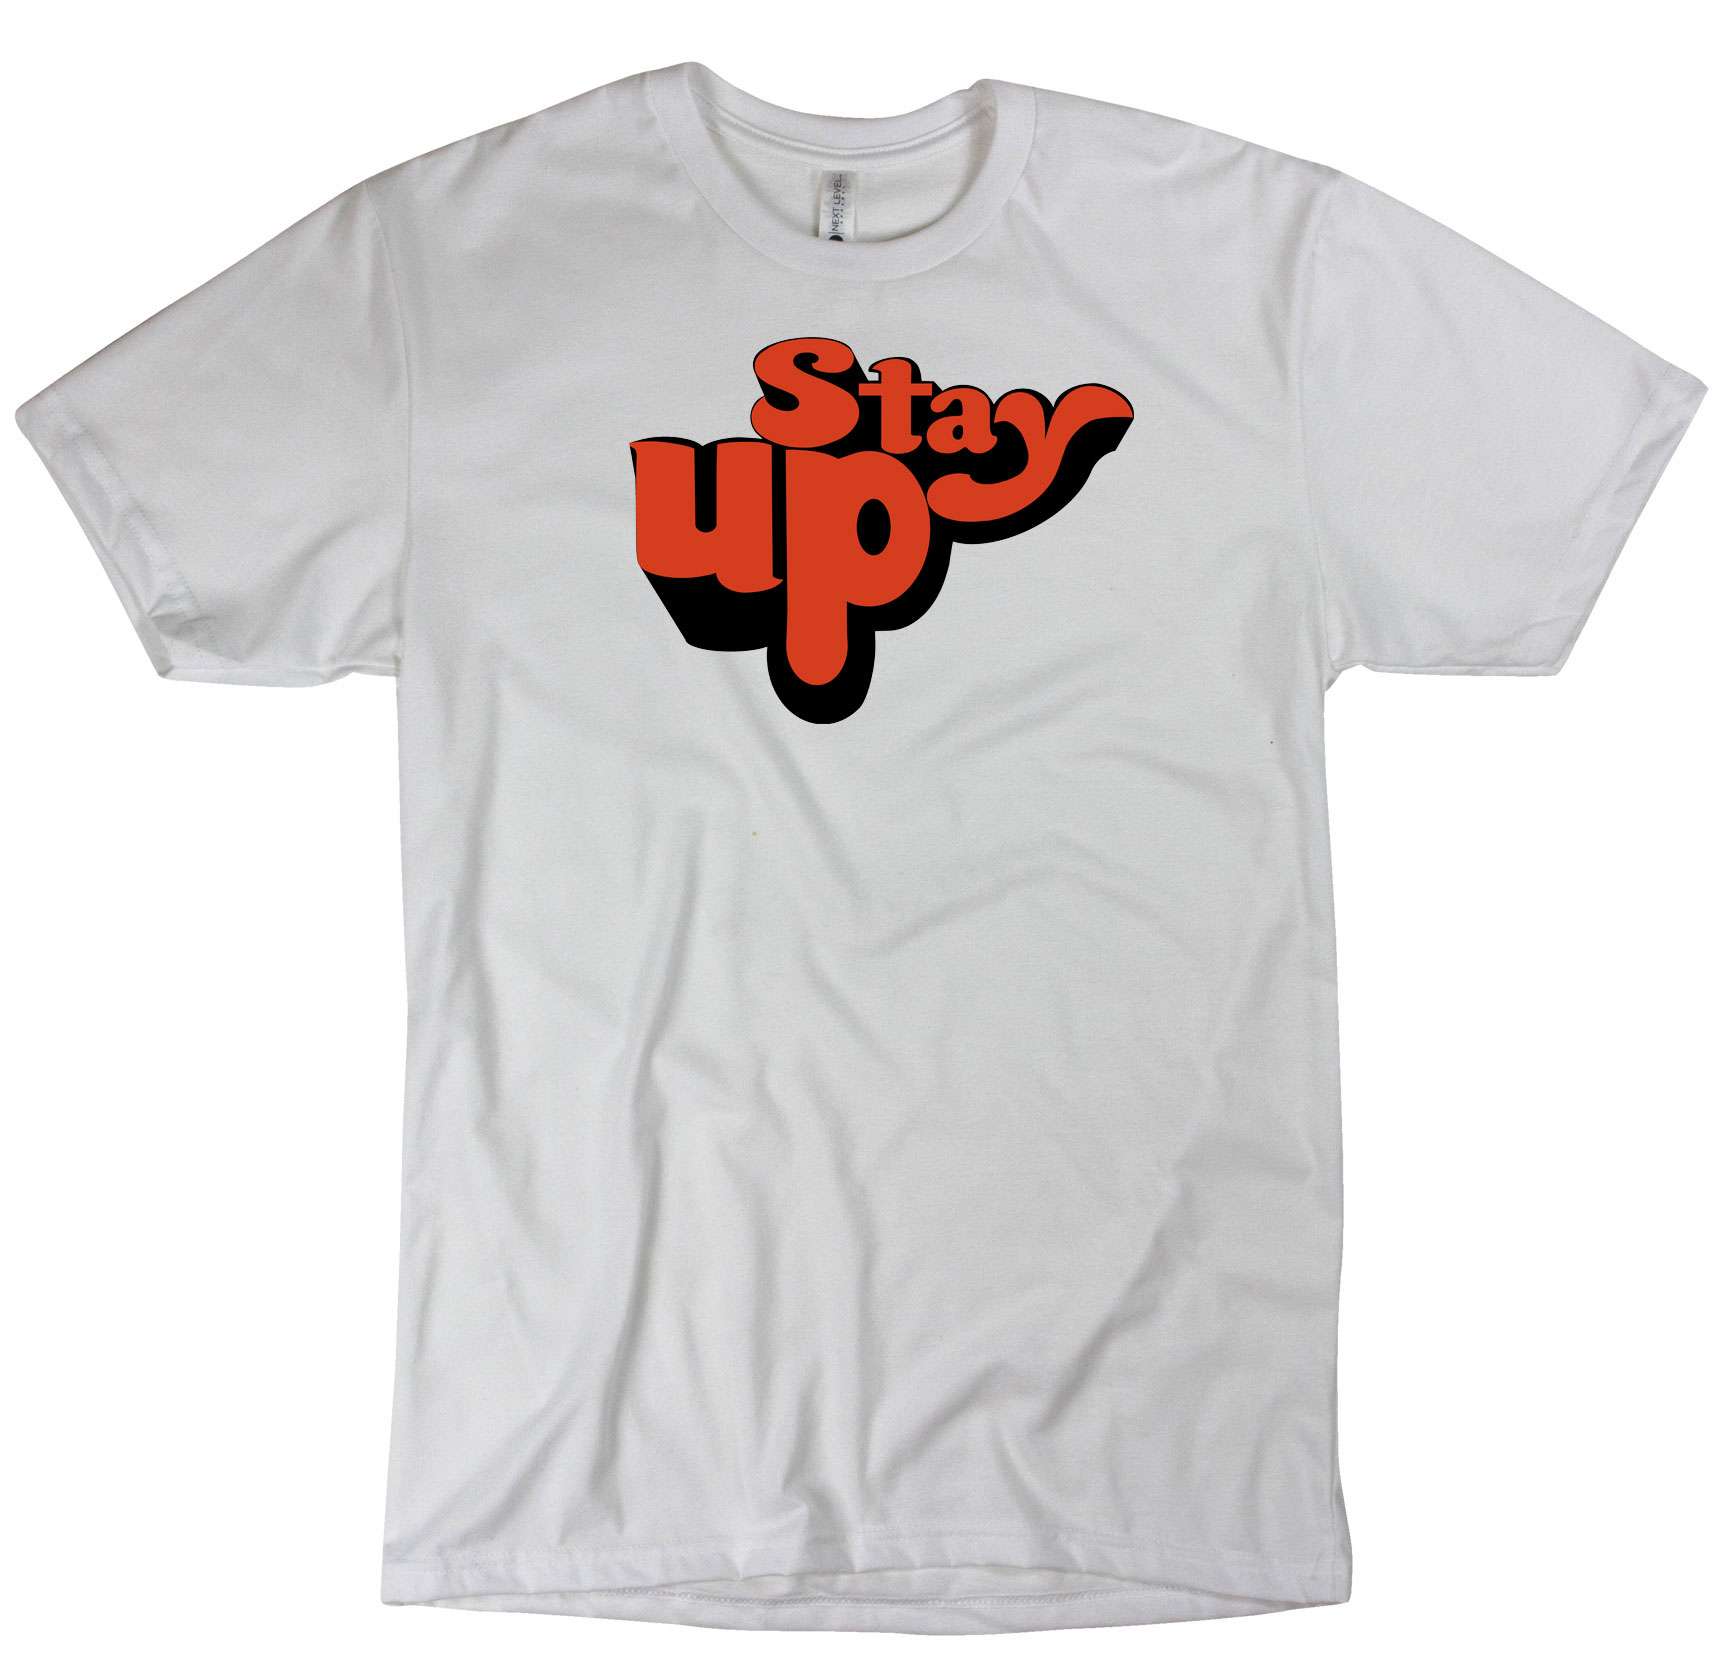 stay up orange logo t shirt